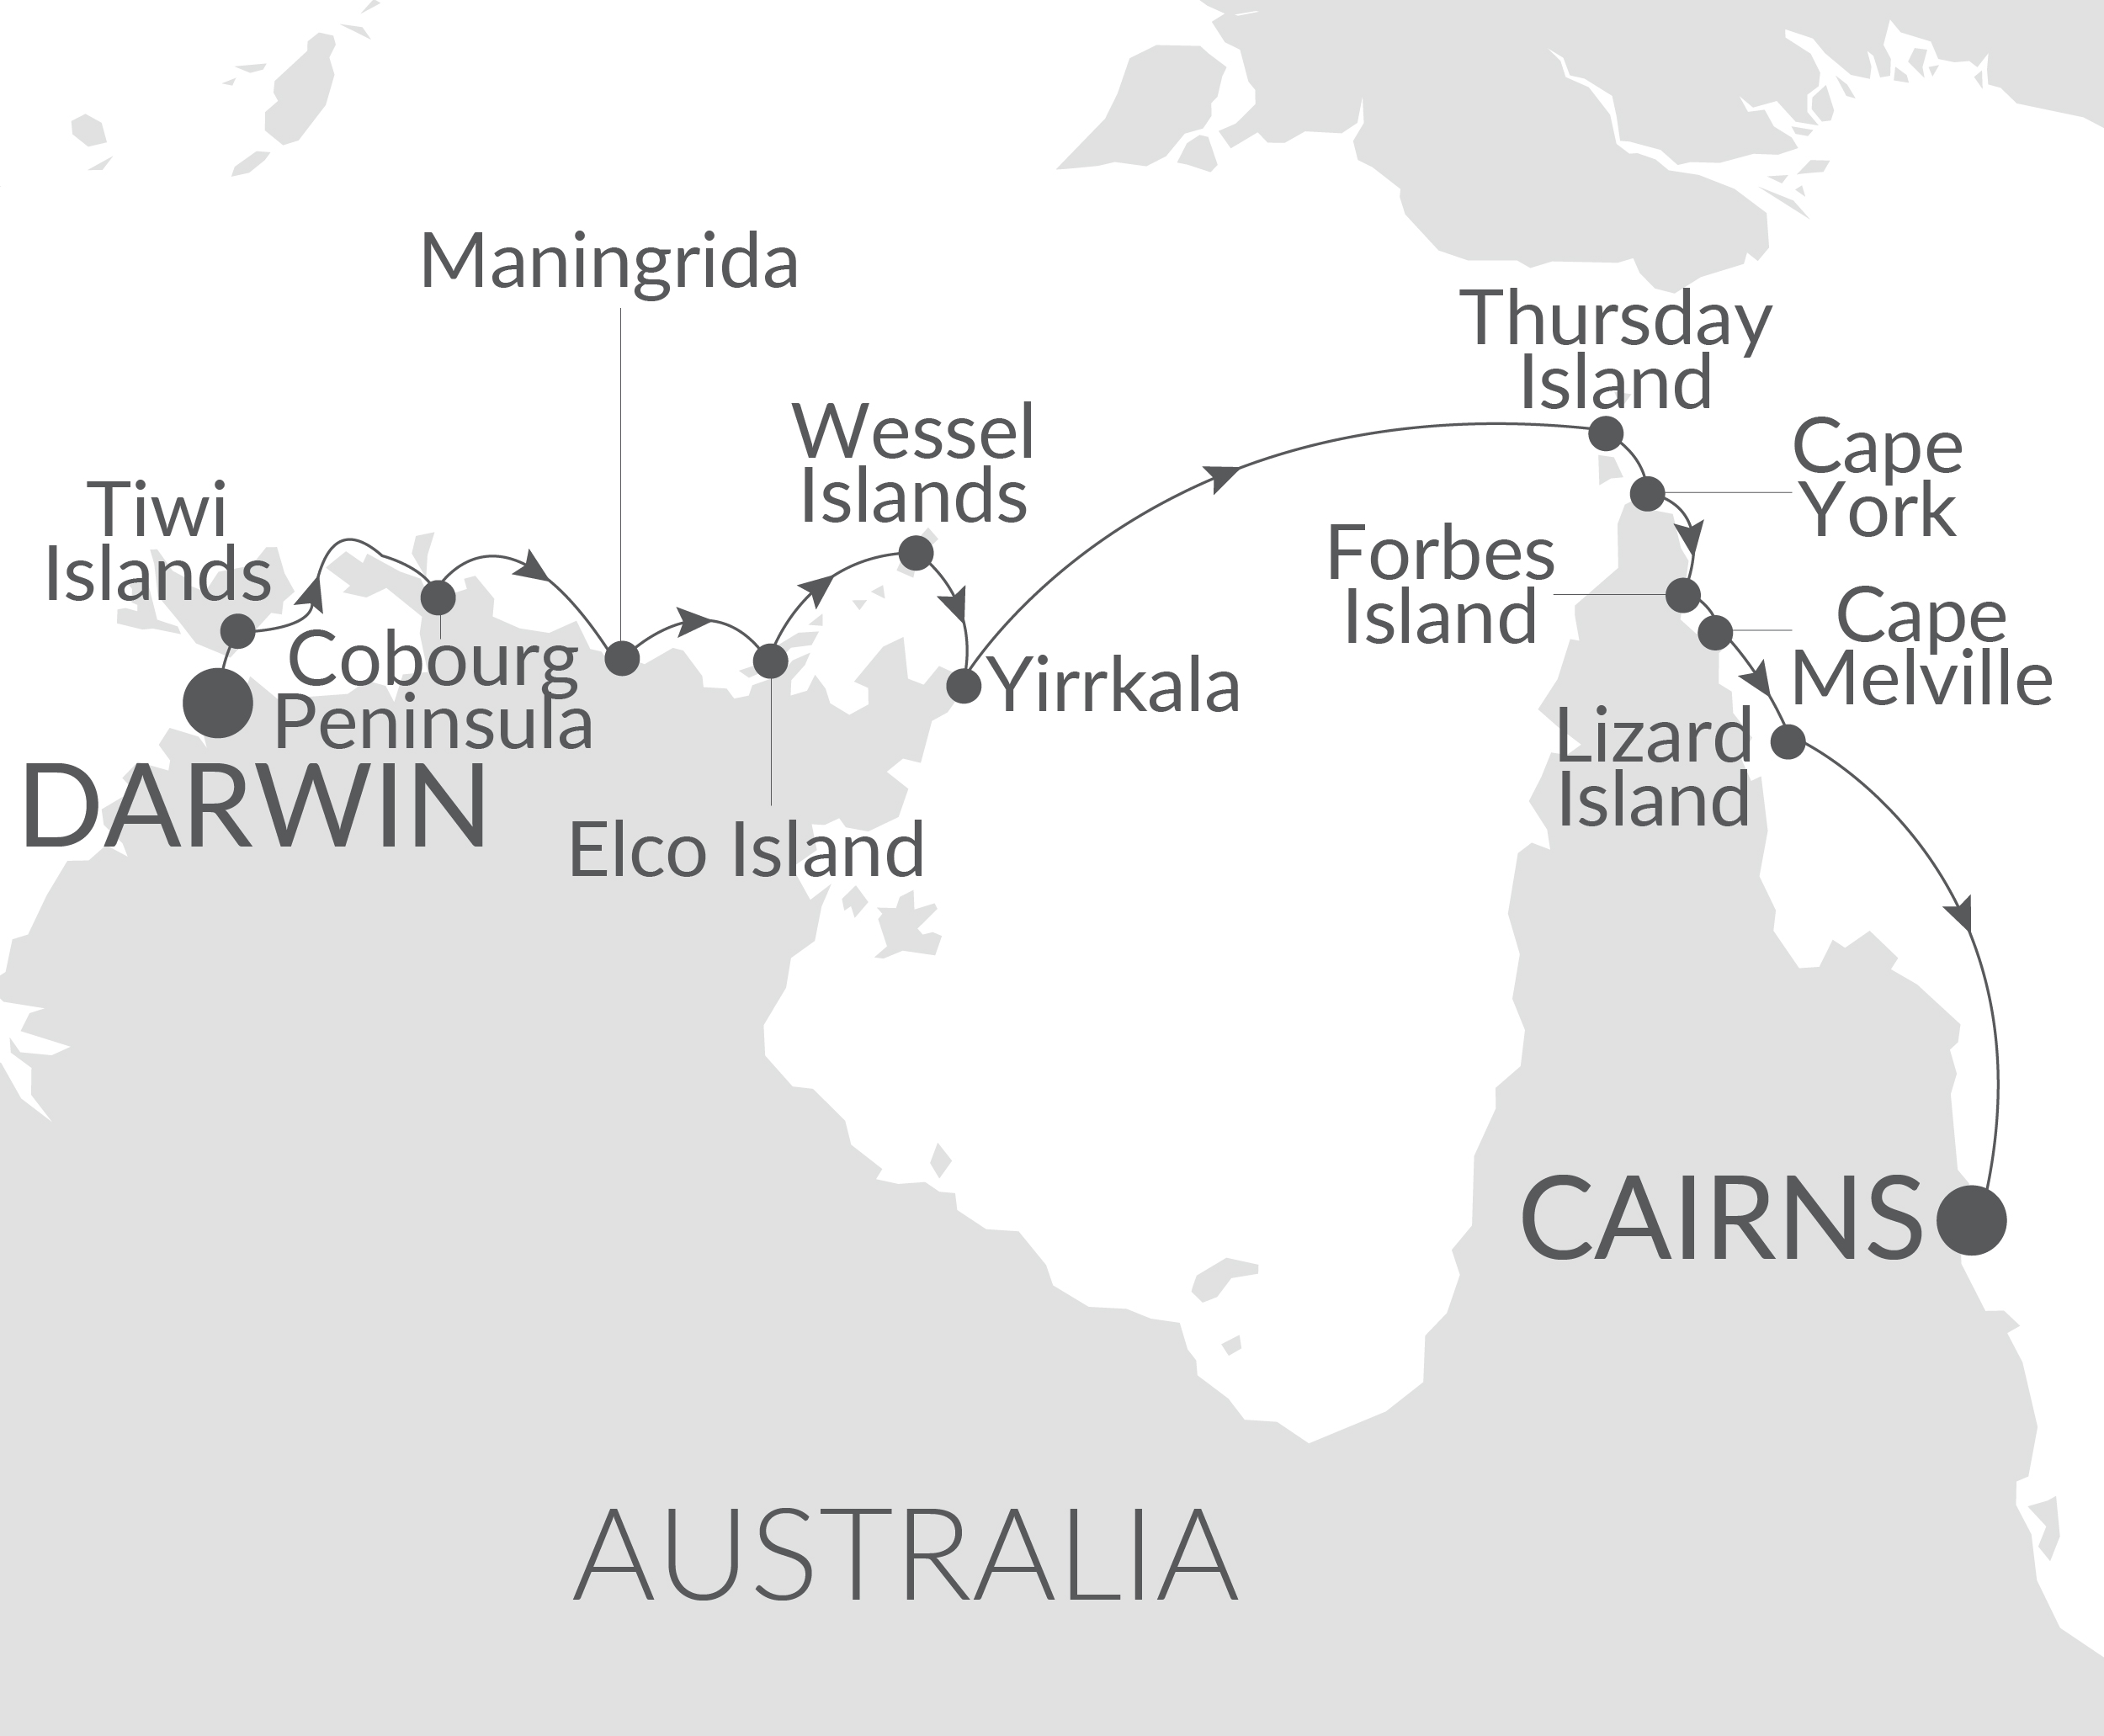 Arnhem Land & Great Barrier Reef Islands